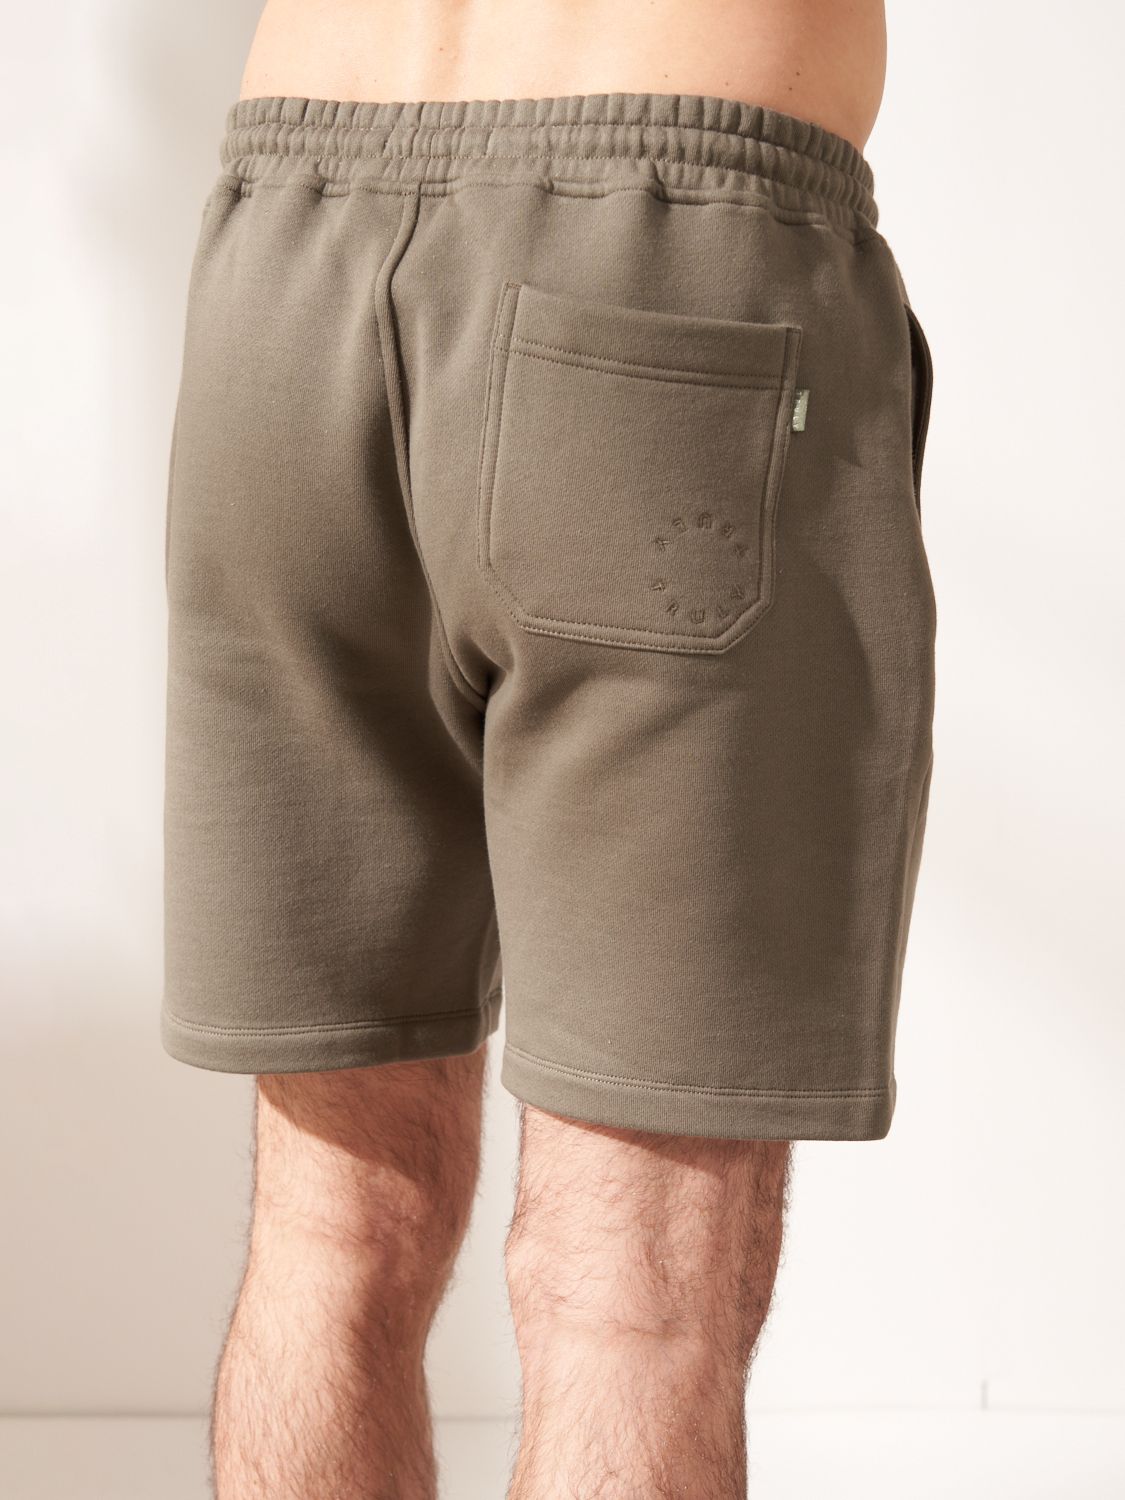 Truly Shorts, Khaki, S